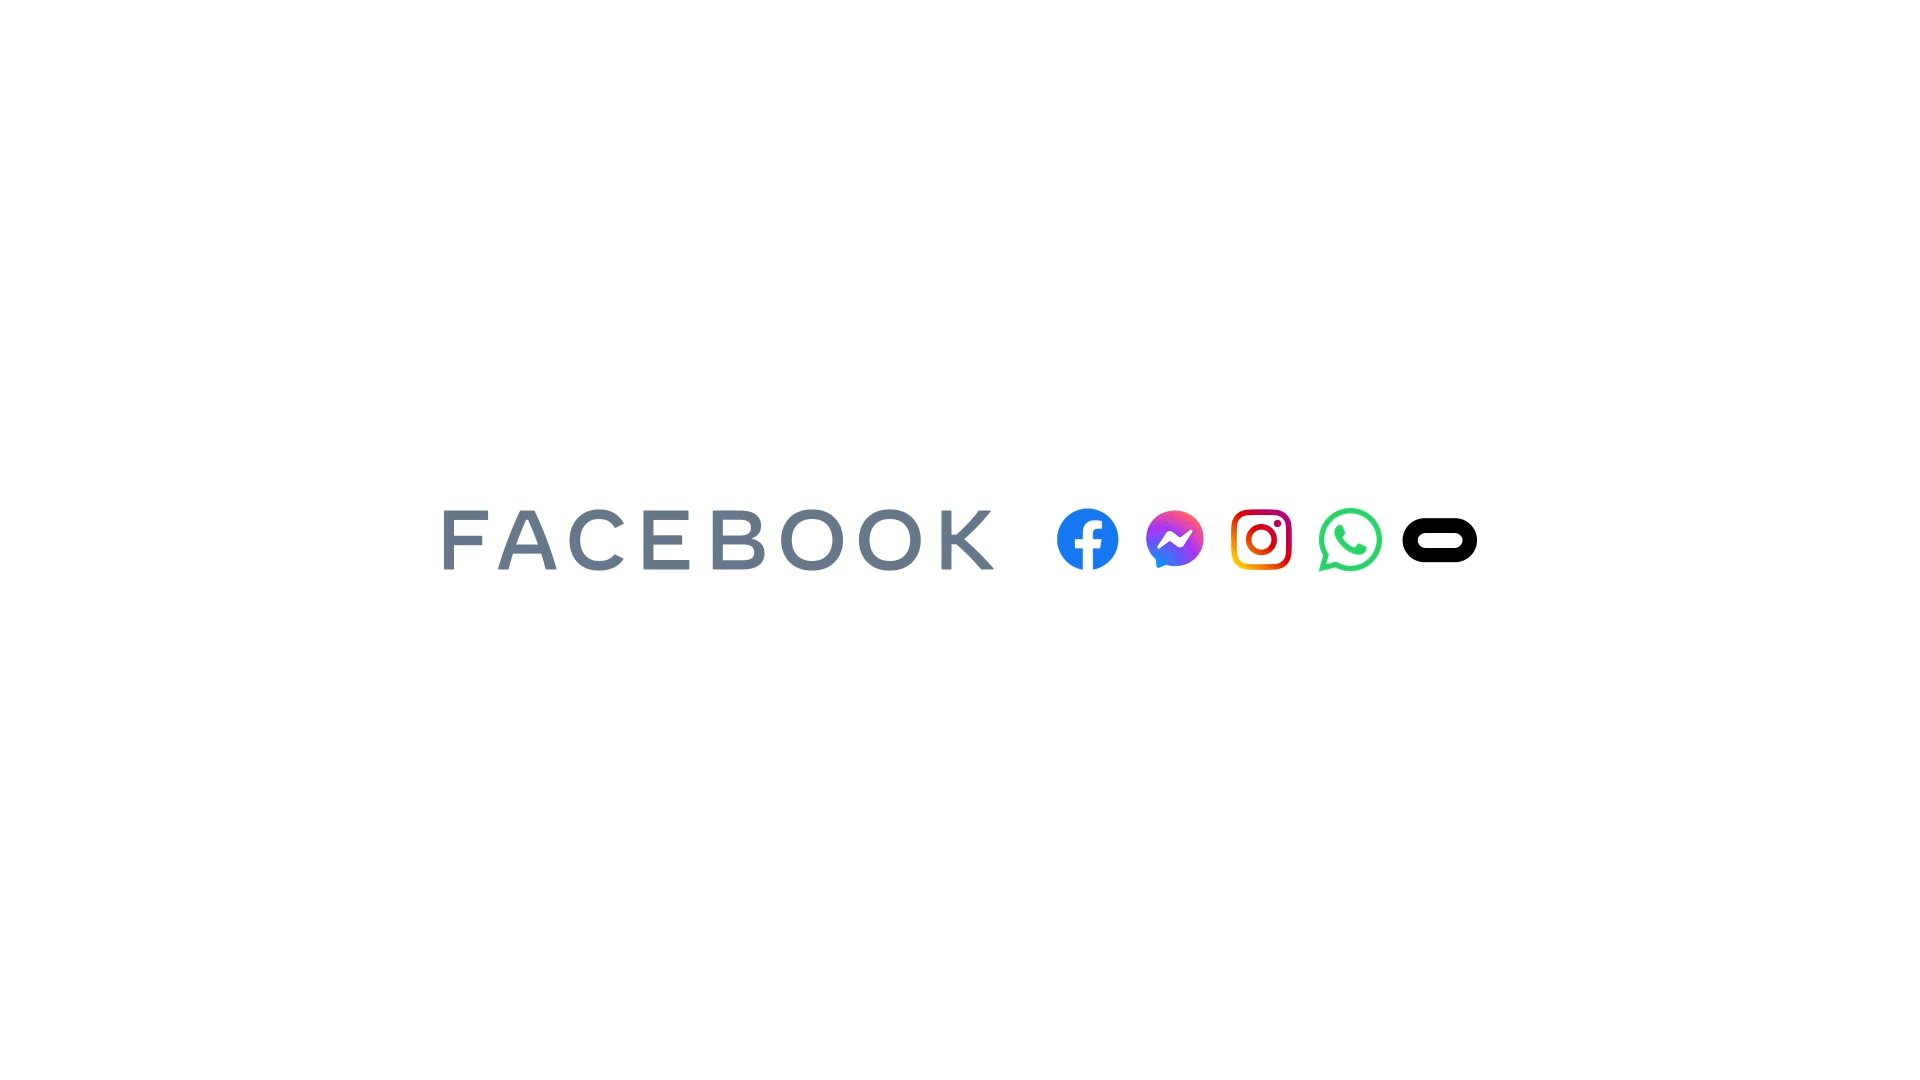 facebook is rebranding itself as meta wilson s media oakland raider logo history small